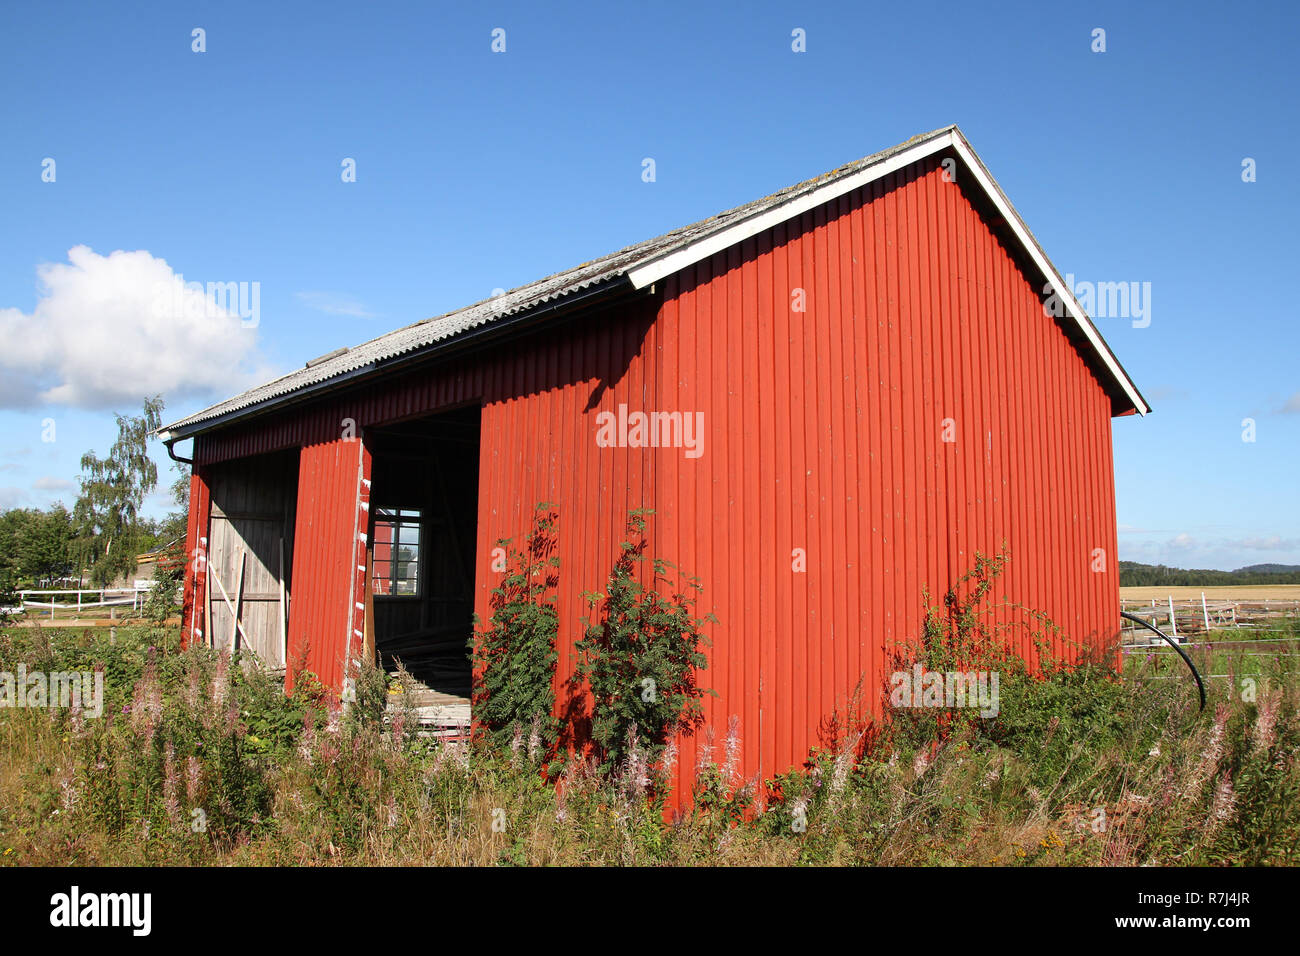 Red Barn Building In Vestfold Region Of Norway Farm In Scandinavia Stock Photo Alamy